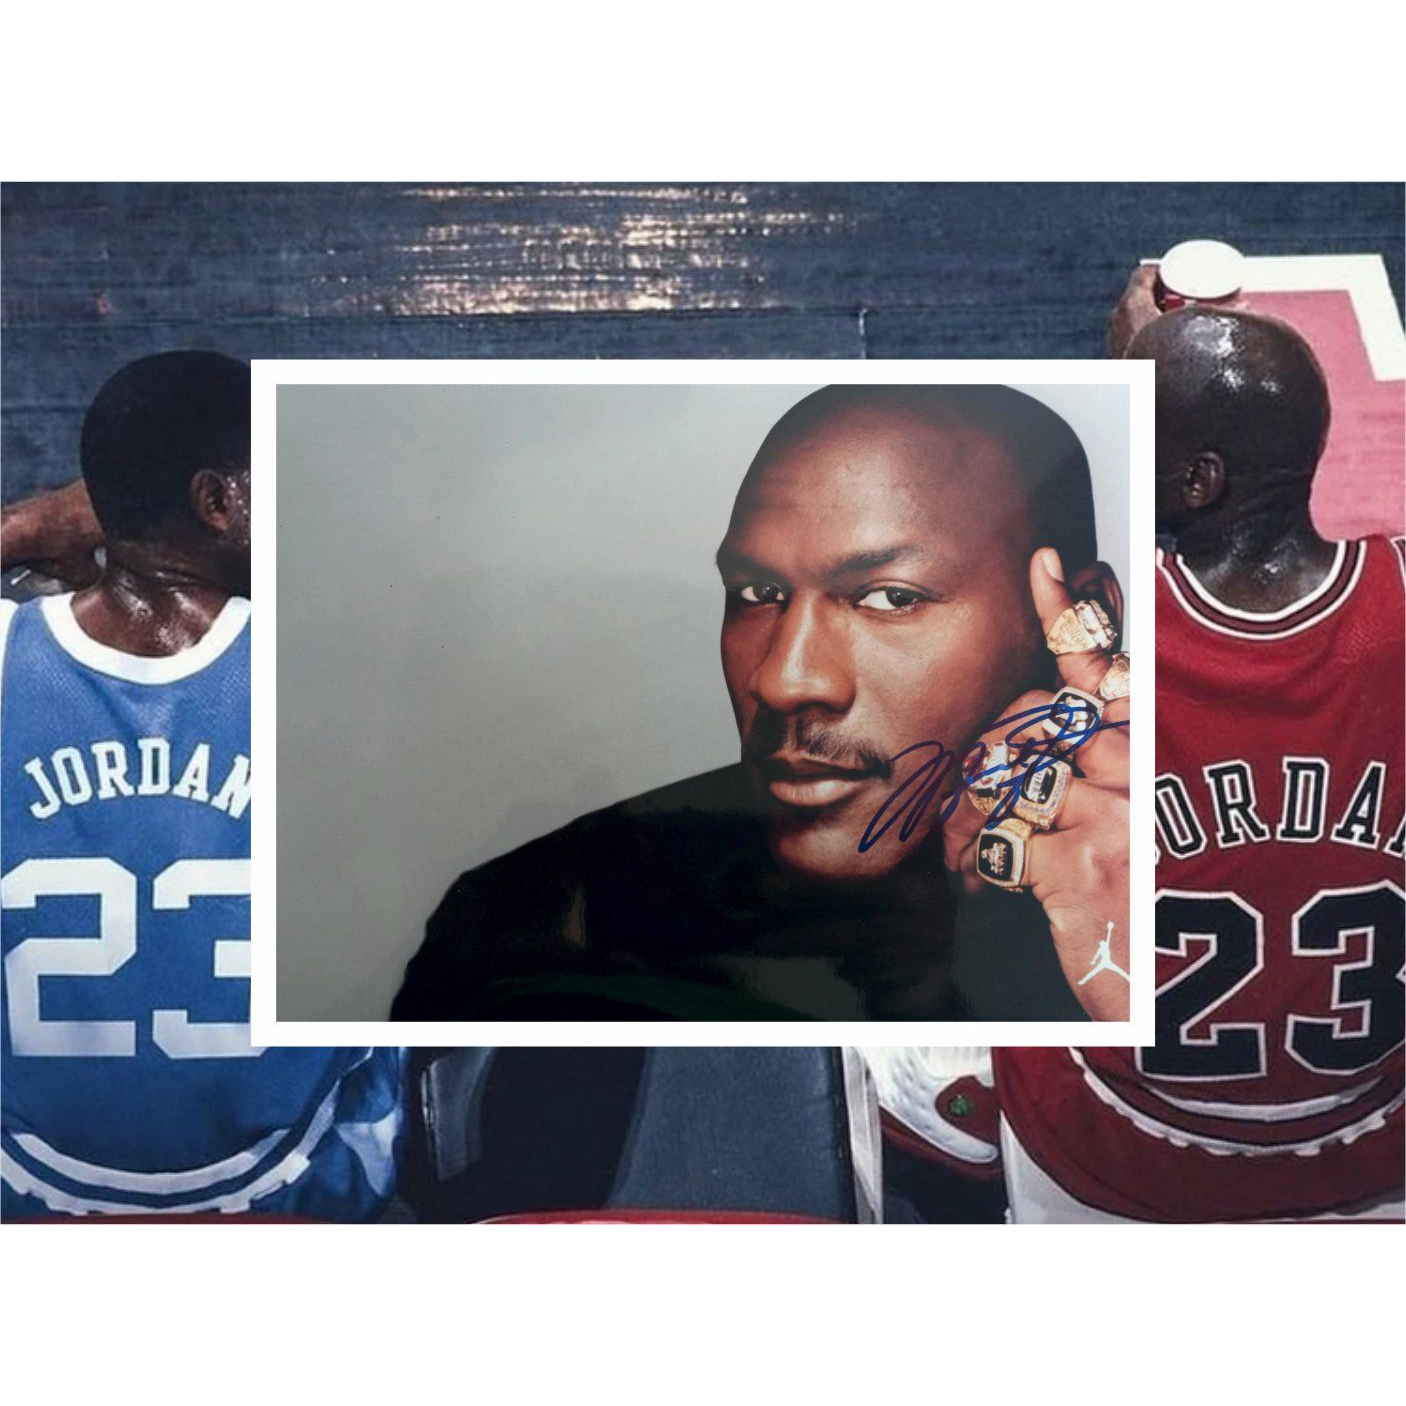 Michael Jordan NBA finals photo 8x10 signed with proof